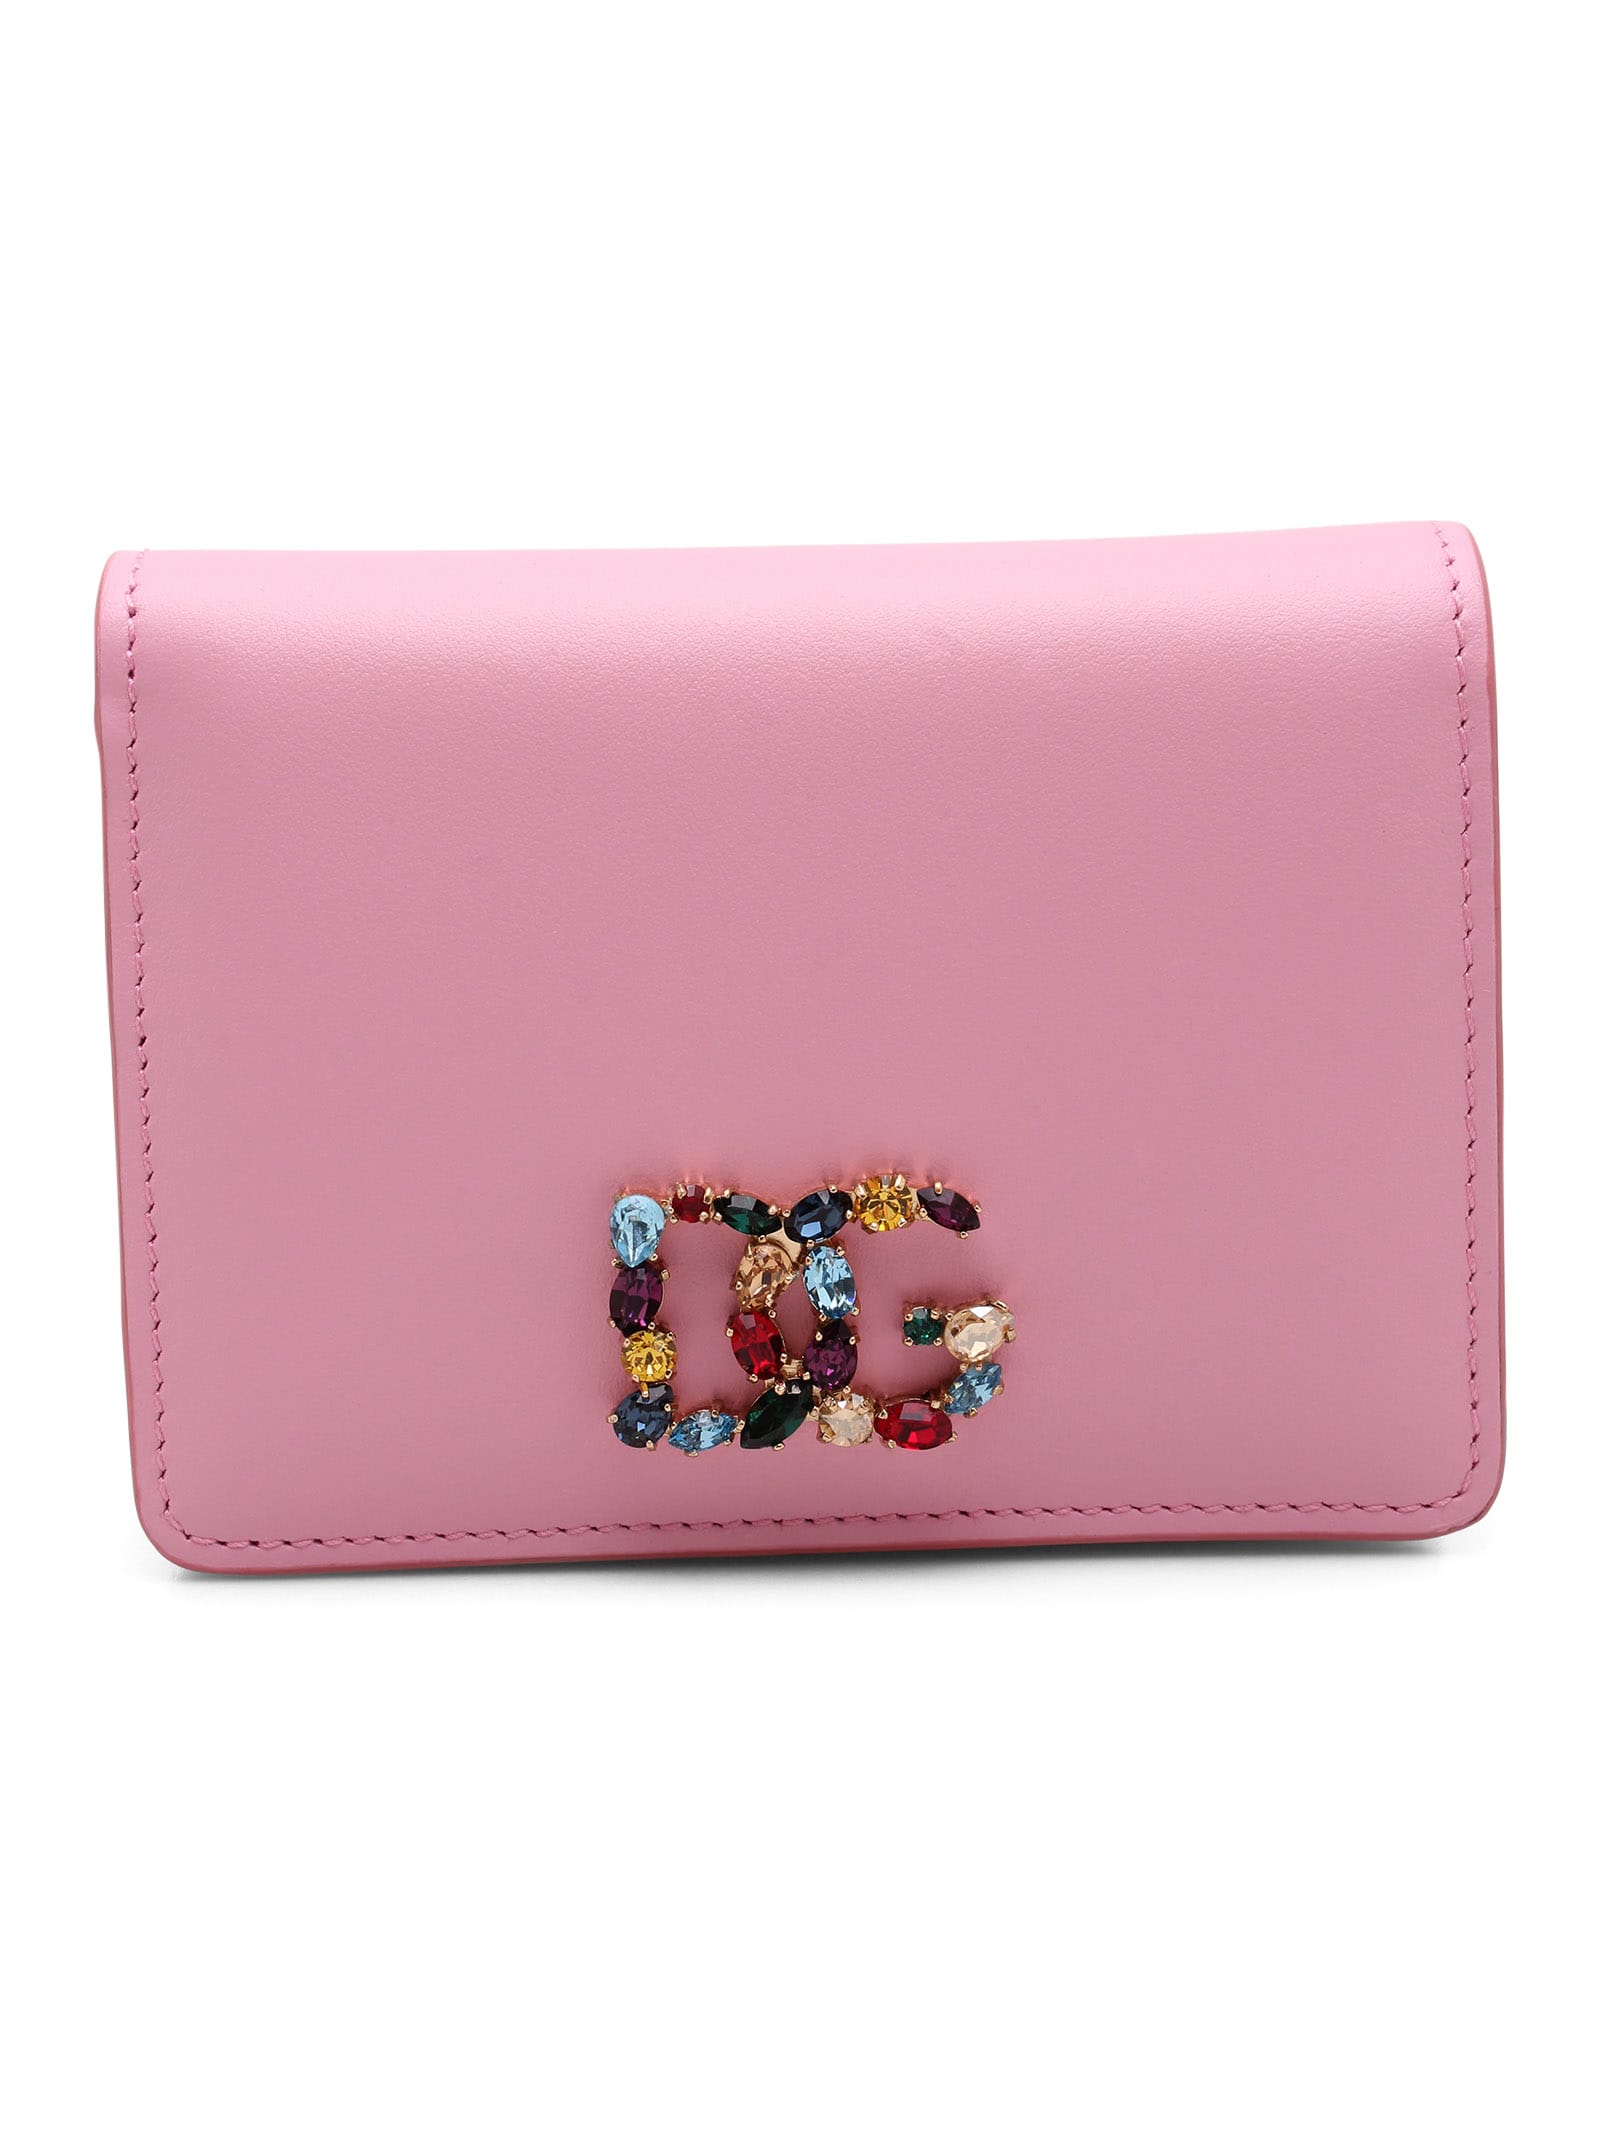 Dolce & Gabbana Crystal Dg Logo Leather Wallet In Pink | ModeSens